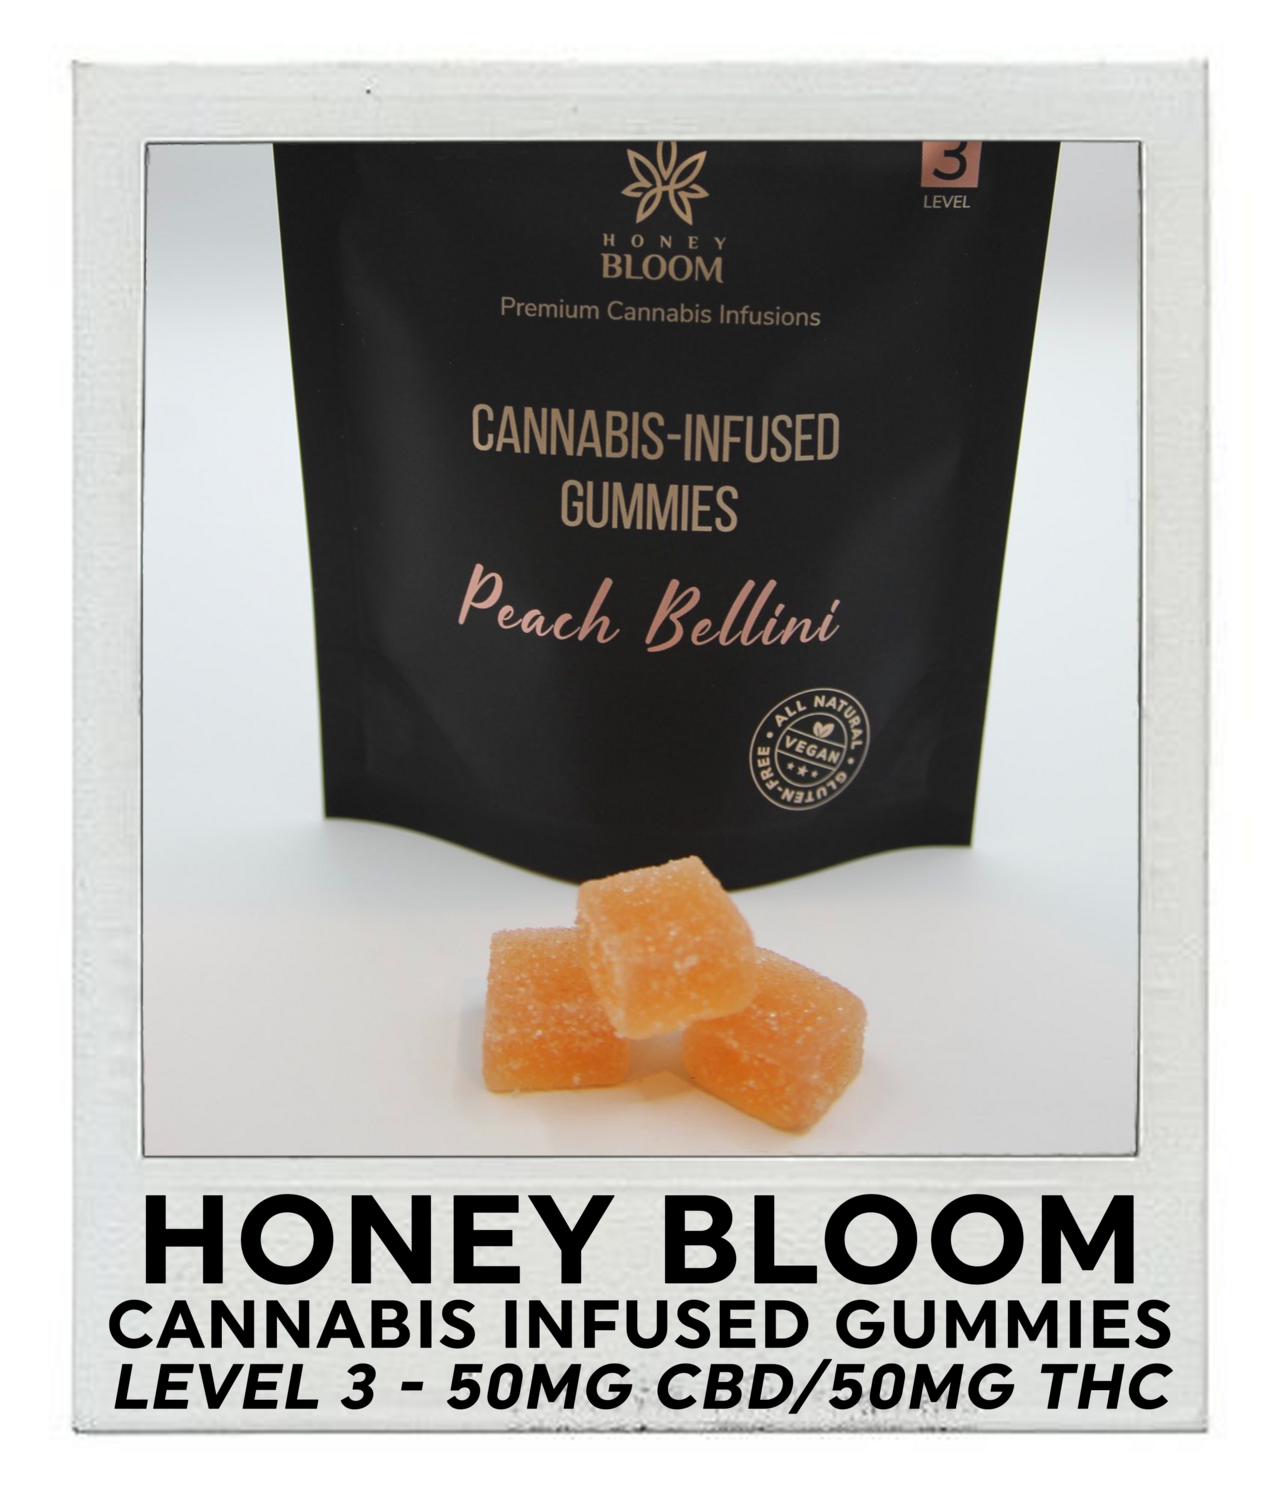 Honey Bloom’s Level 3 Cannabis-Infused Gummies (10pc/5mg THC + 5mg CBD)